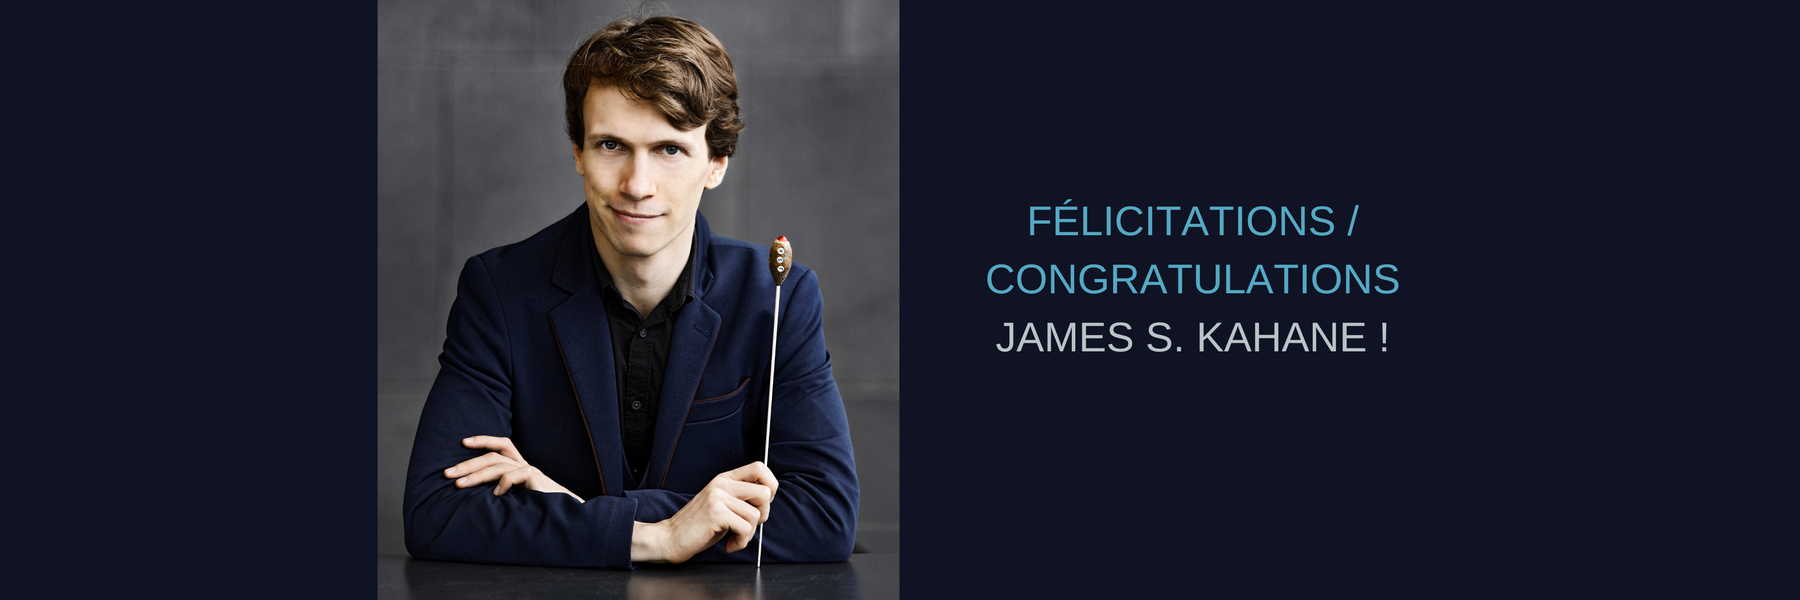 <h1>Congratulations James S. Kahane !</h1>